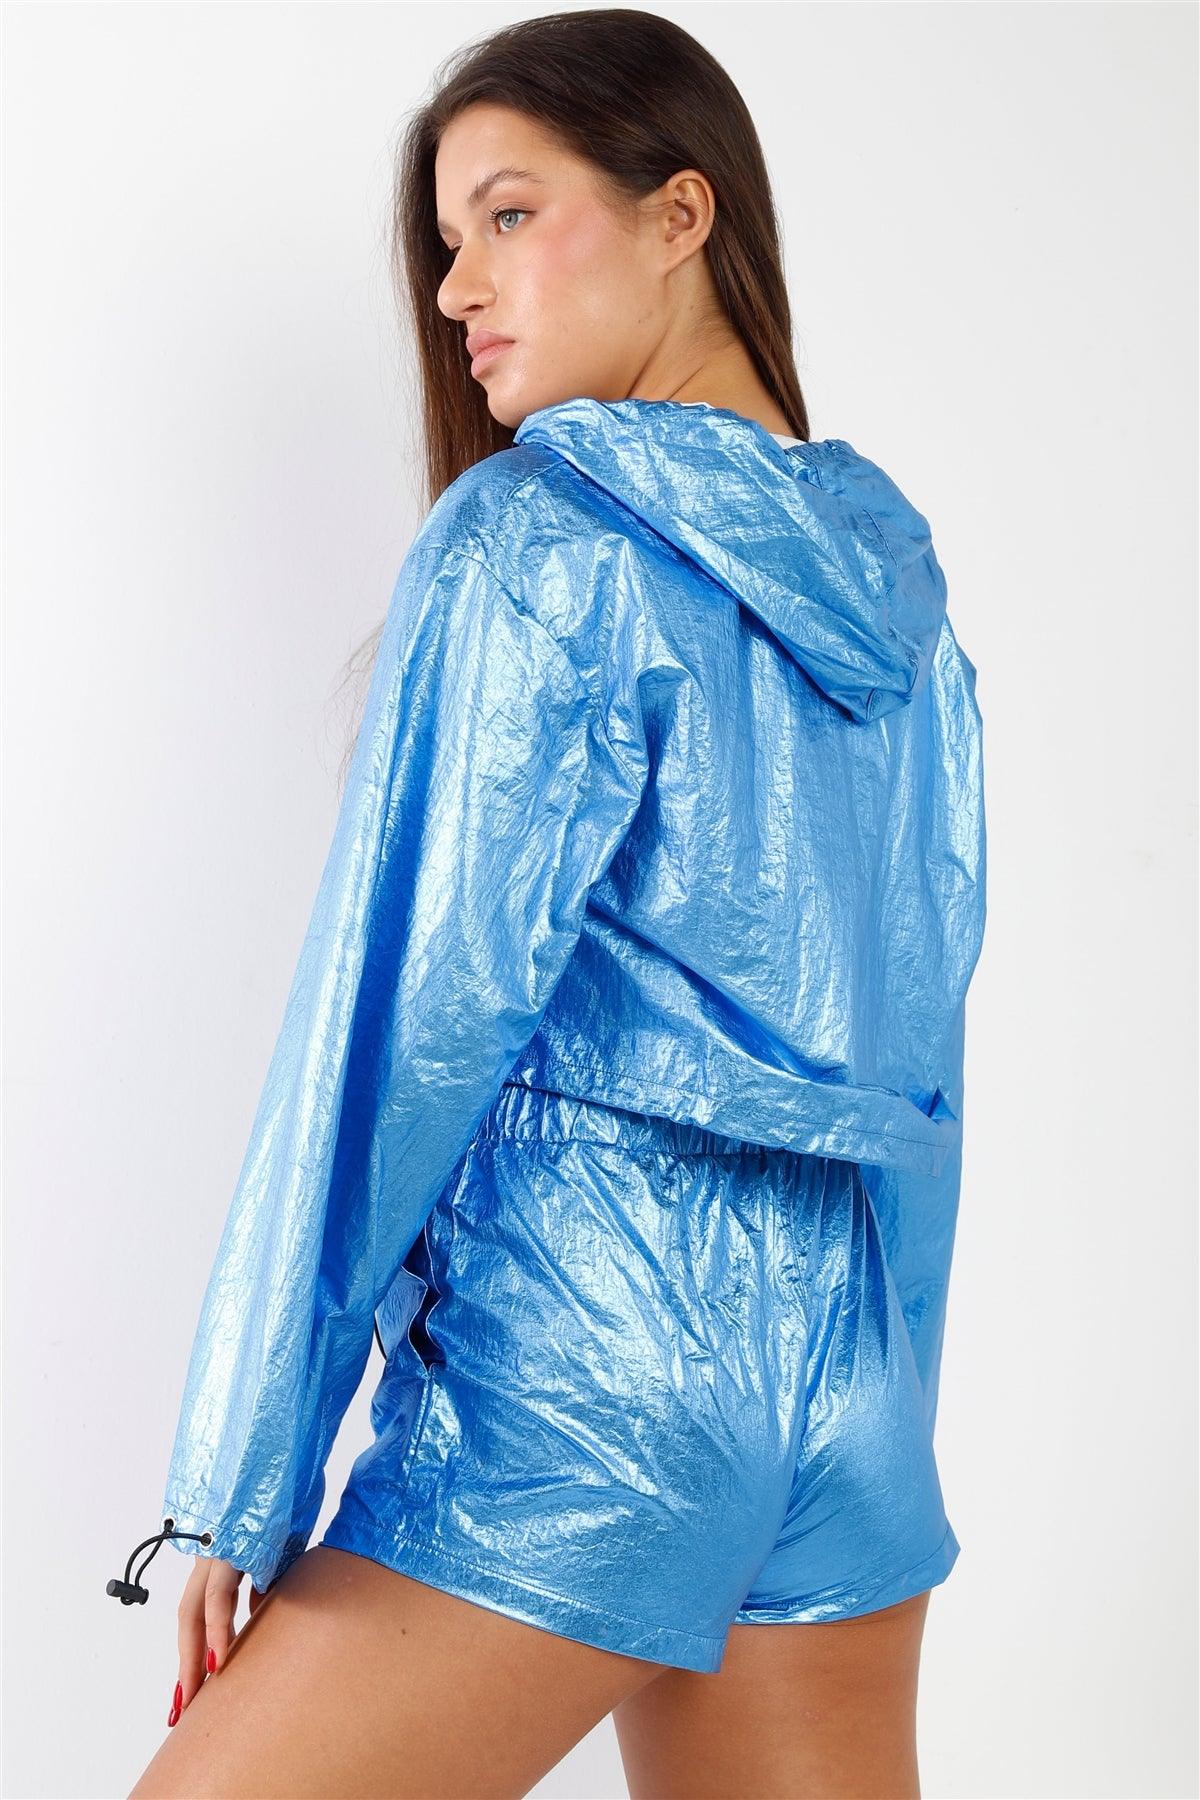 Metallic Blue Water Proof Hooded Draw String Crop Top & Short Sporty Activewear Set